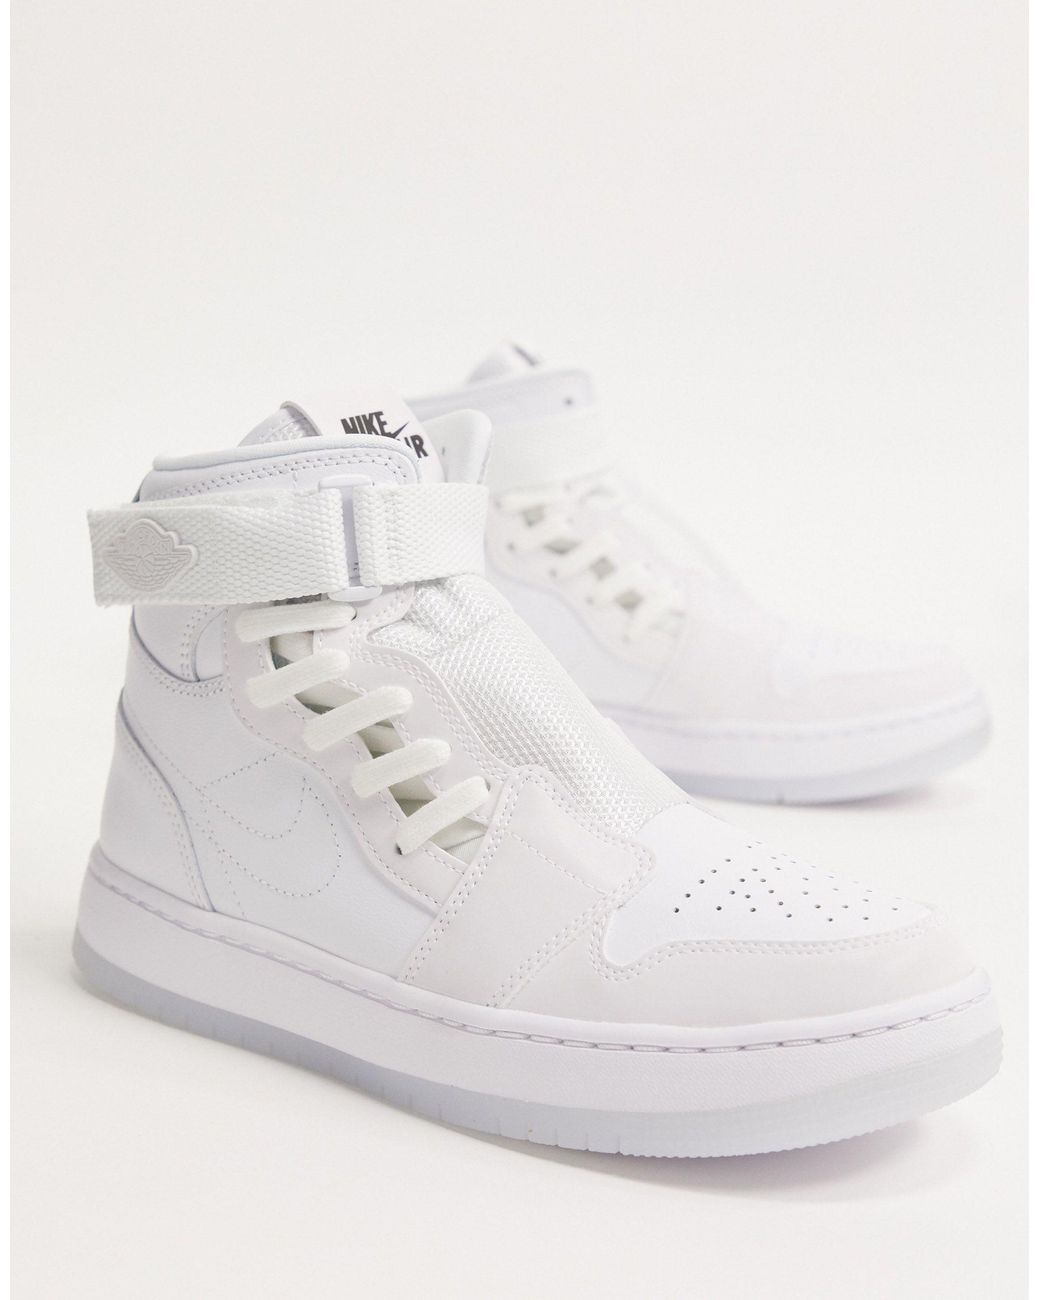 Nike Leather Air Jordan 1 Nova Xx Shoe in White & Black (White) | Lyst